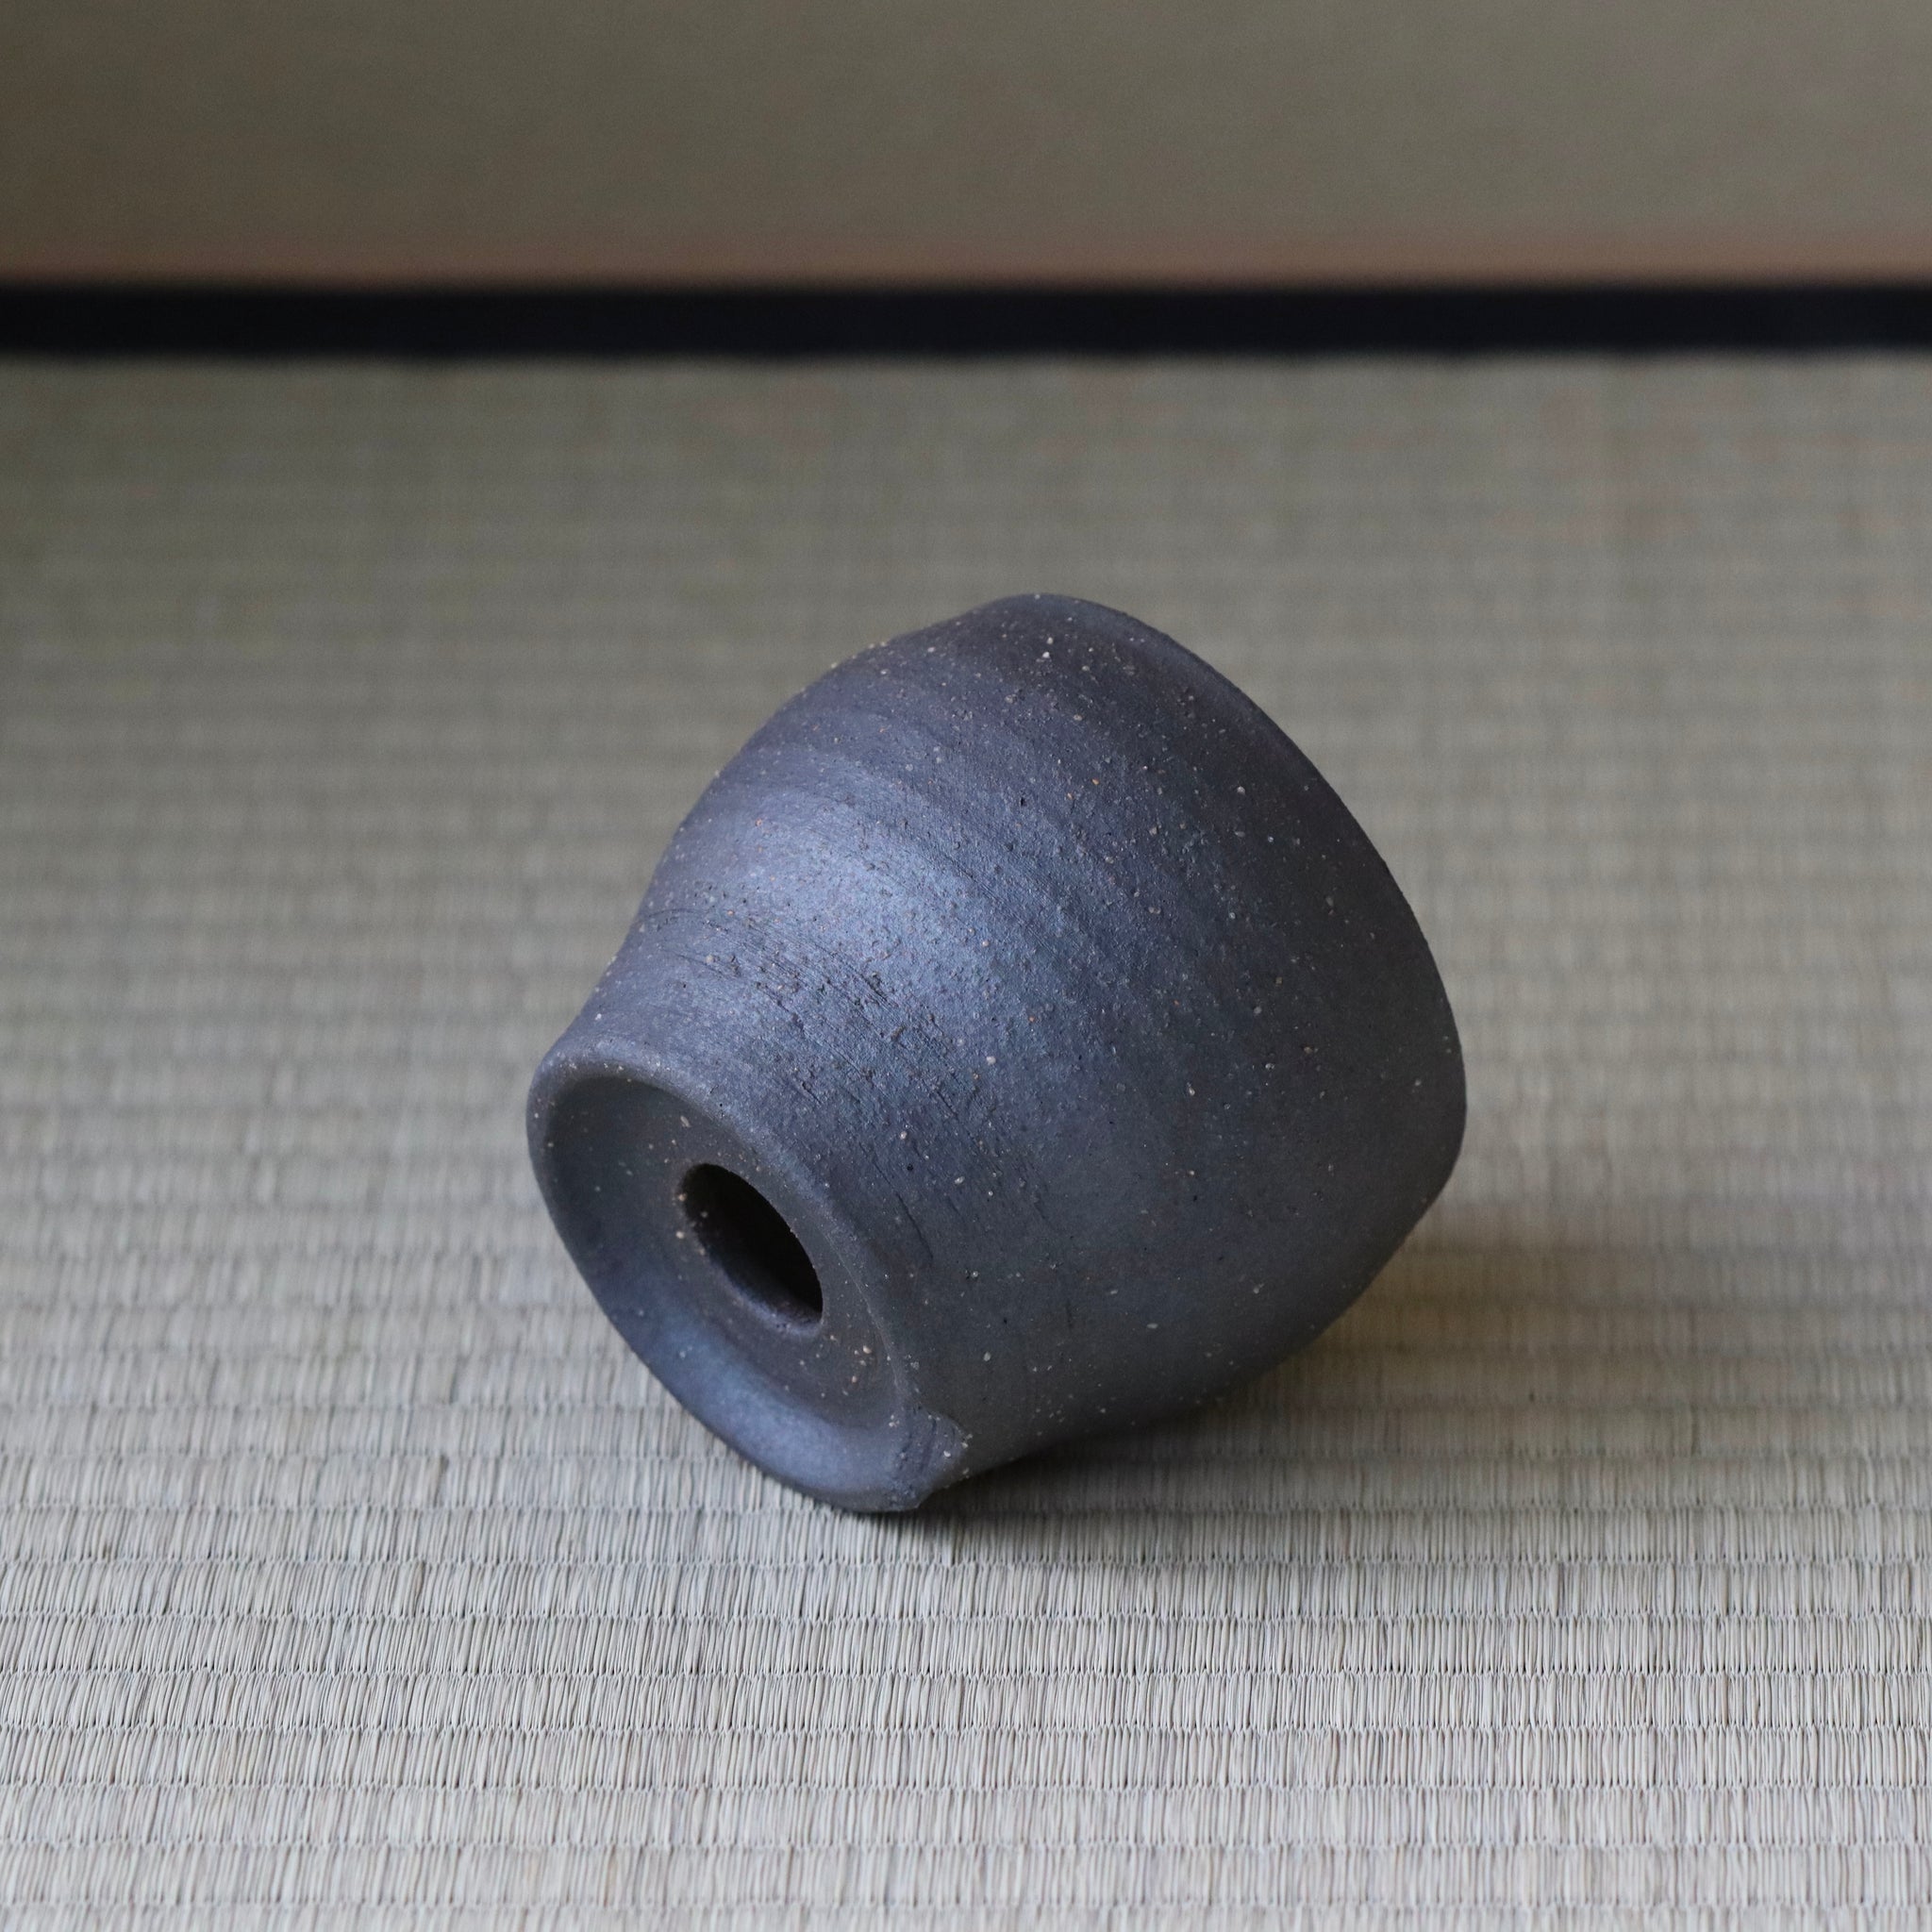 Handmade pot by Takaoka, B-6